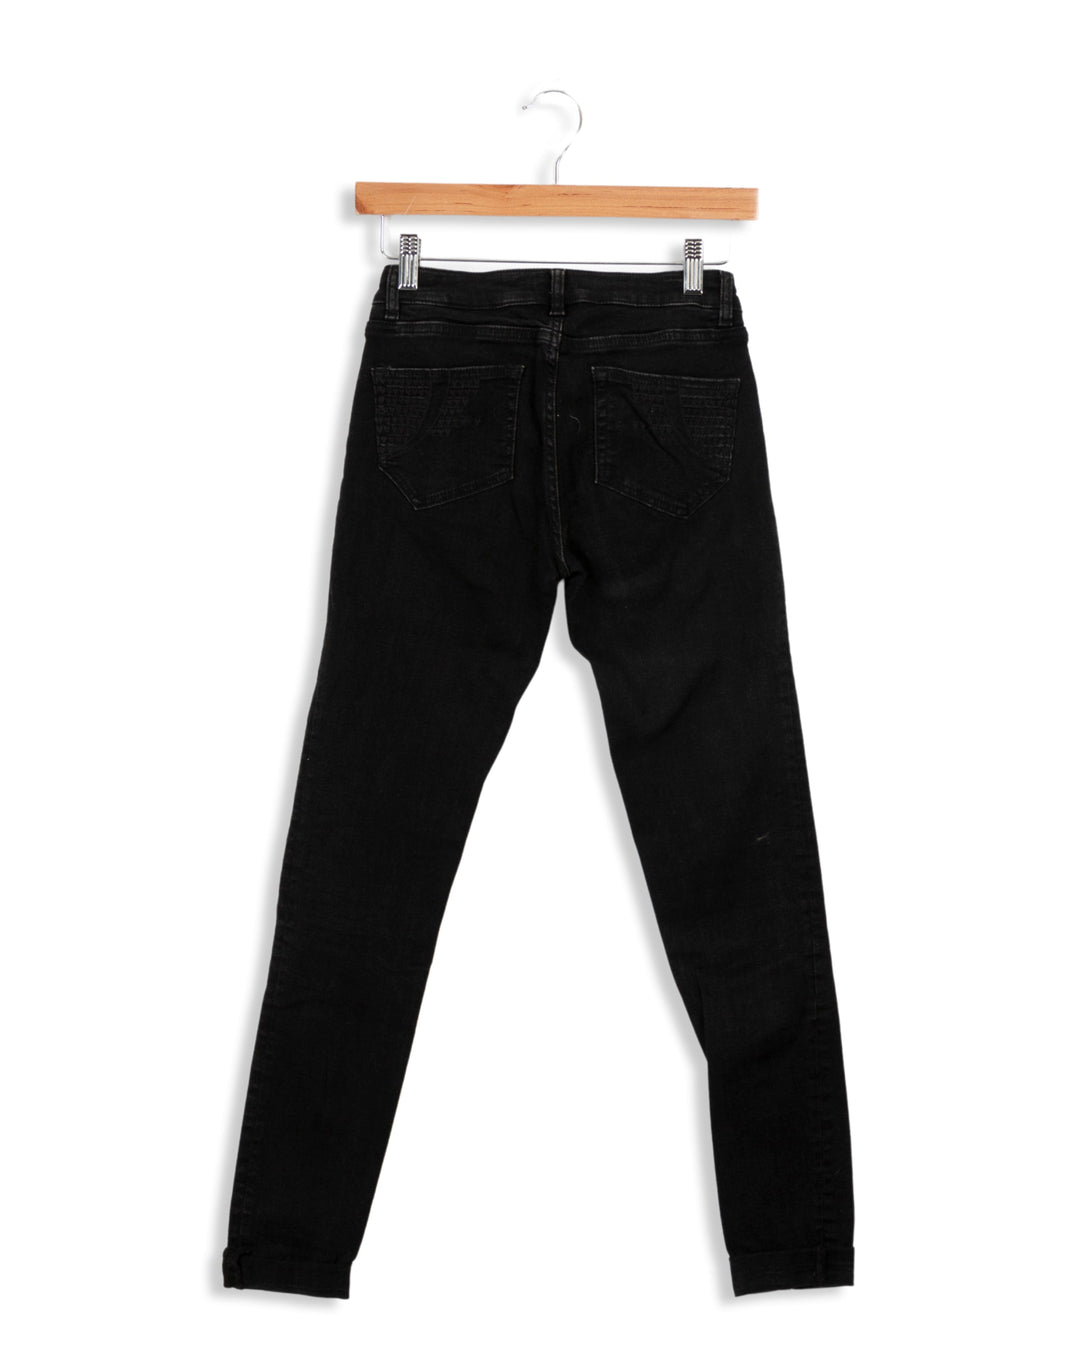 Black jeans - 36